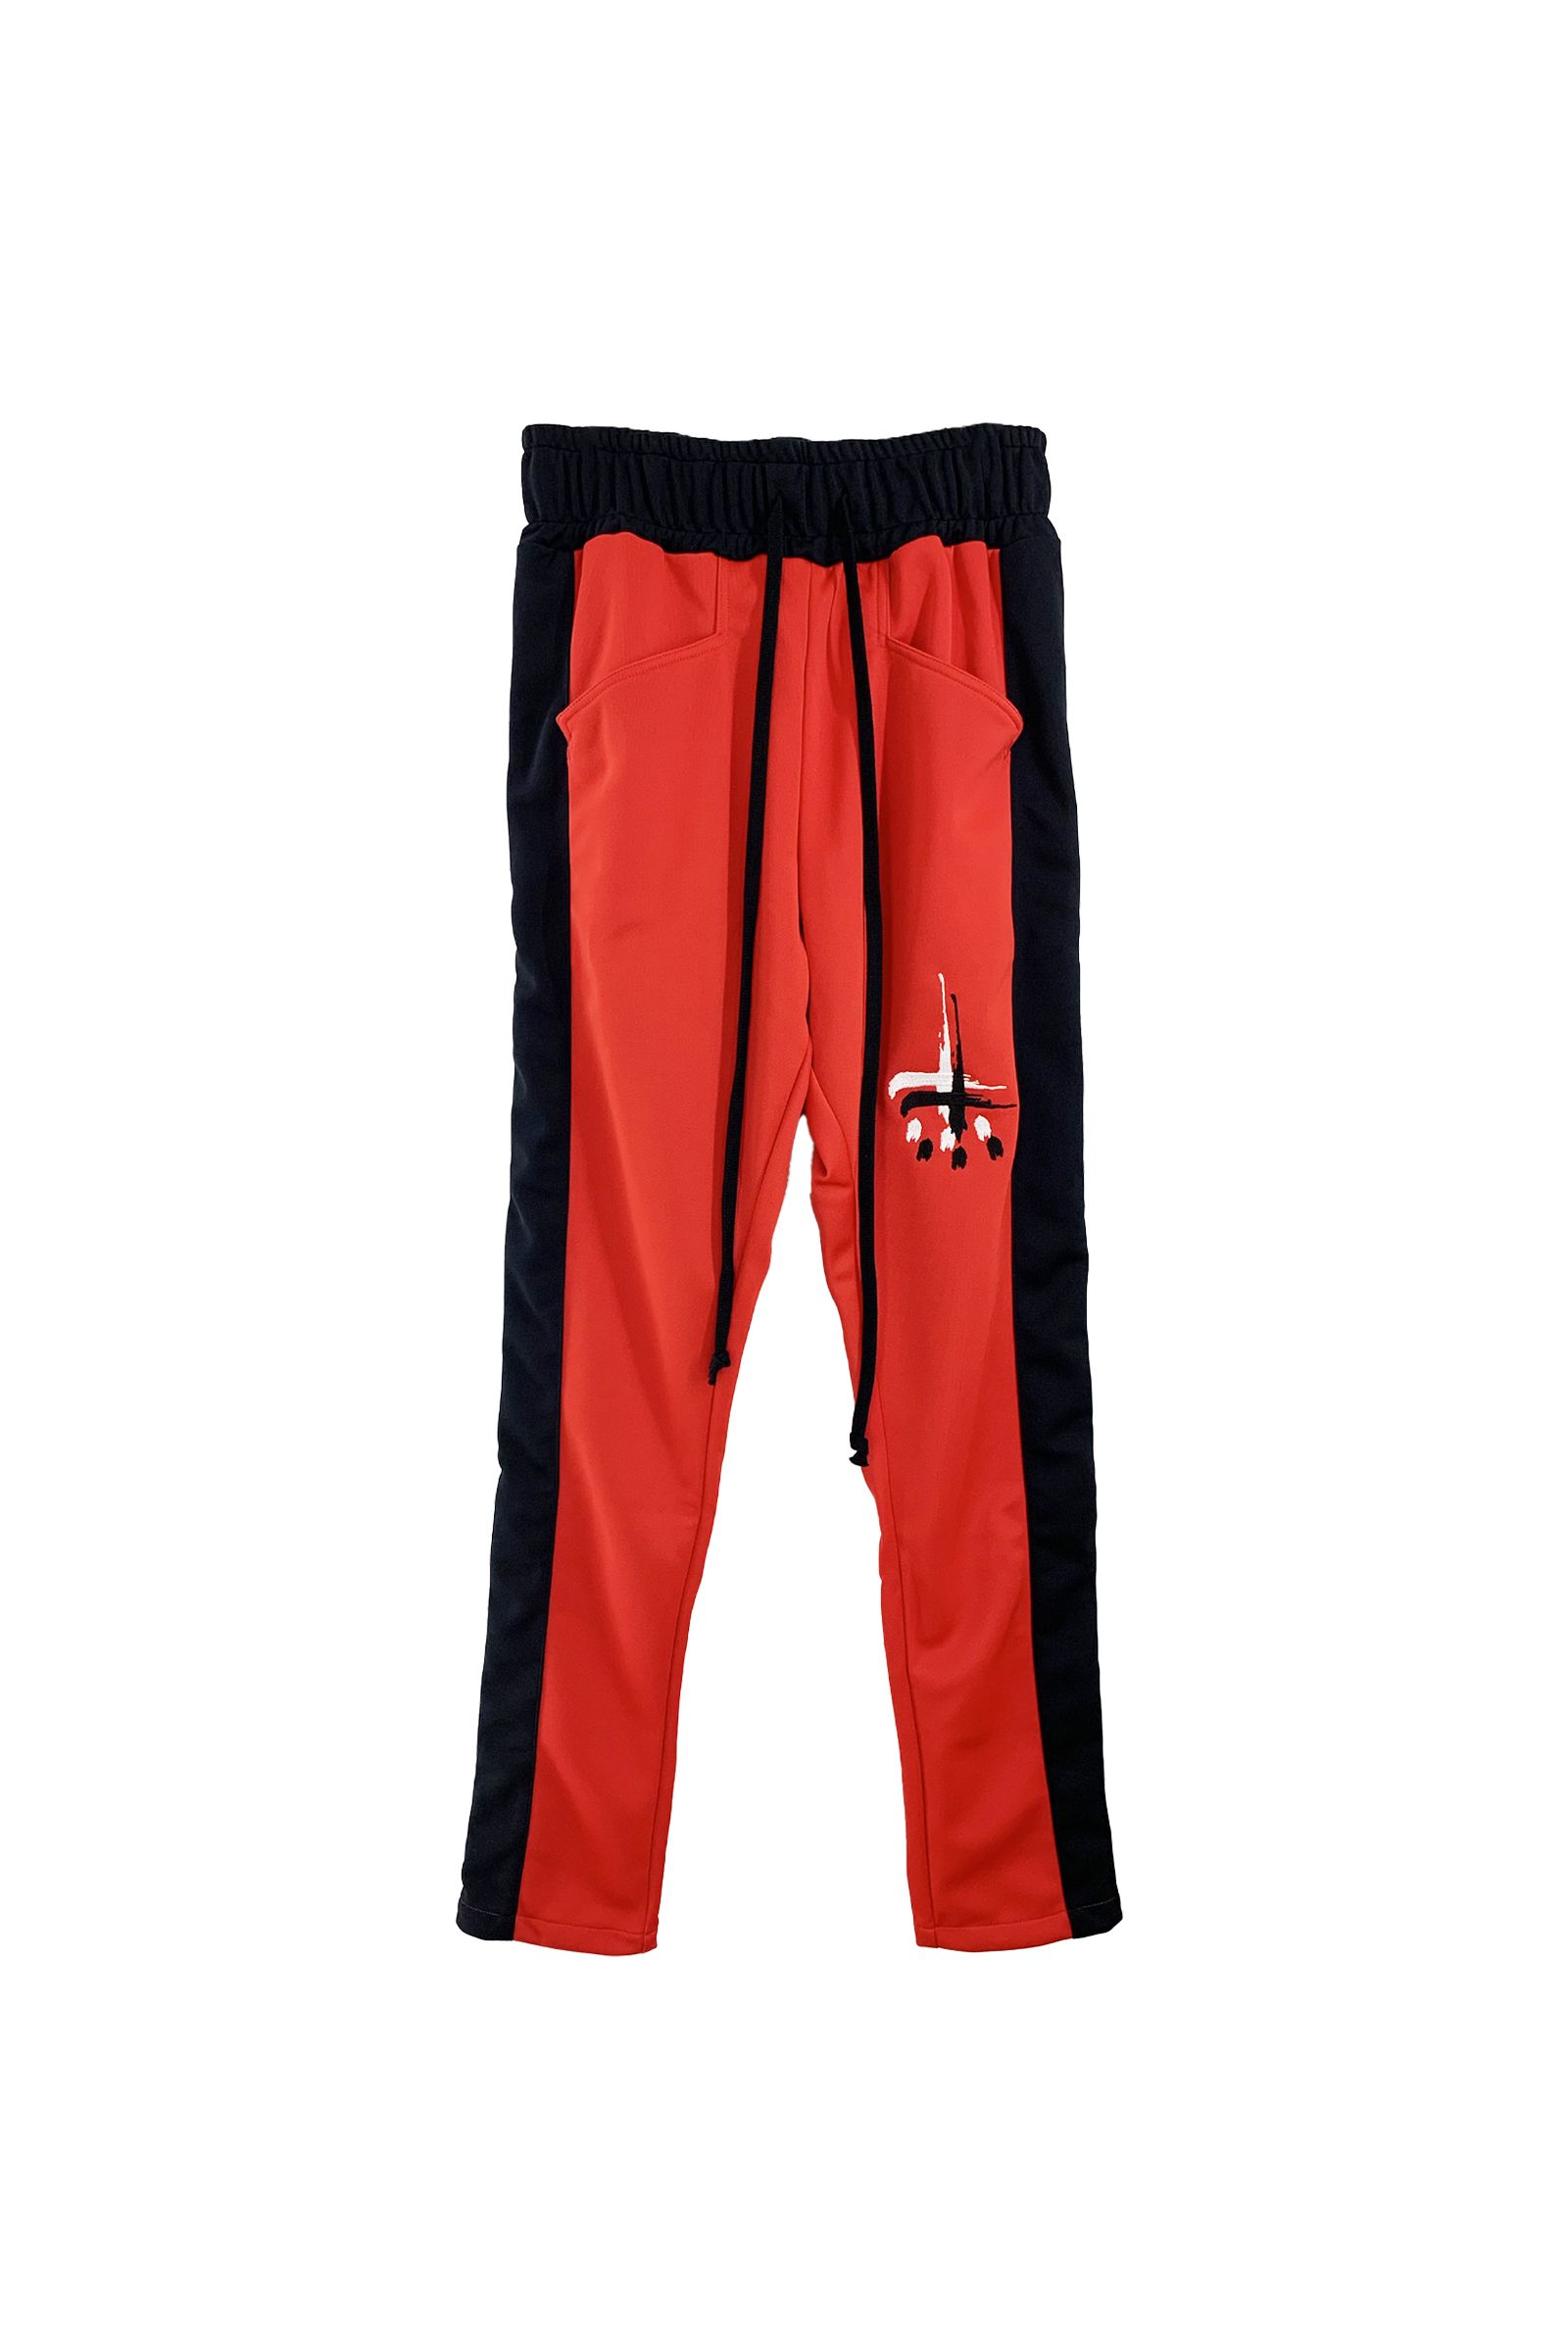 CVTVLIST - Side Snap Pants red black/gray | Detail